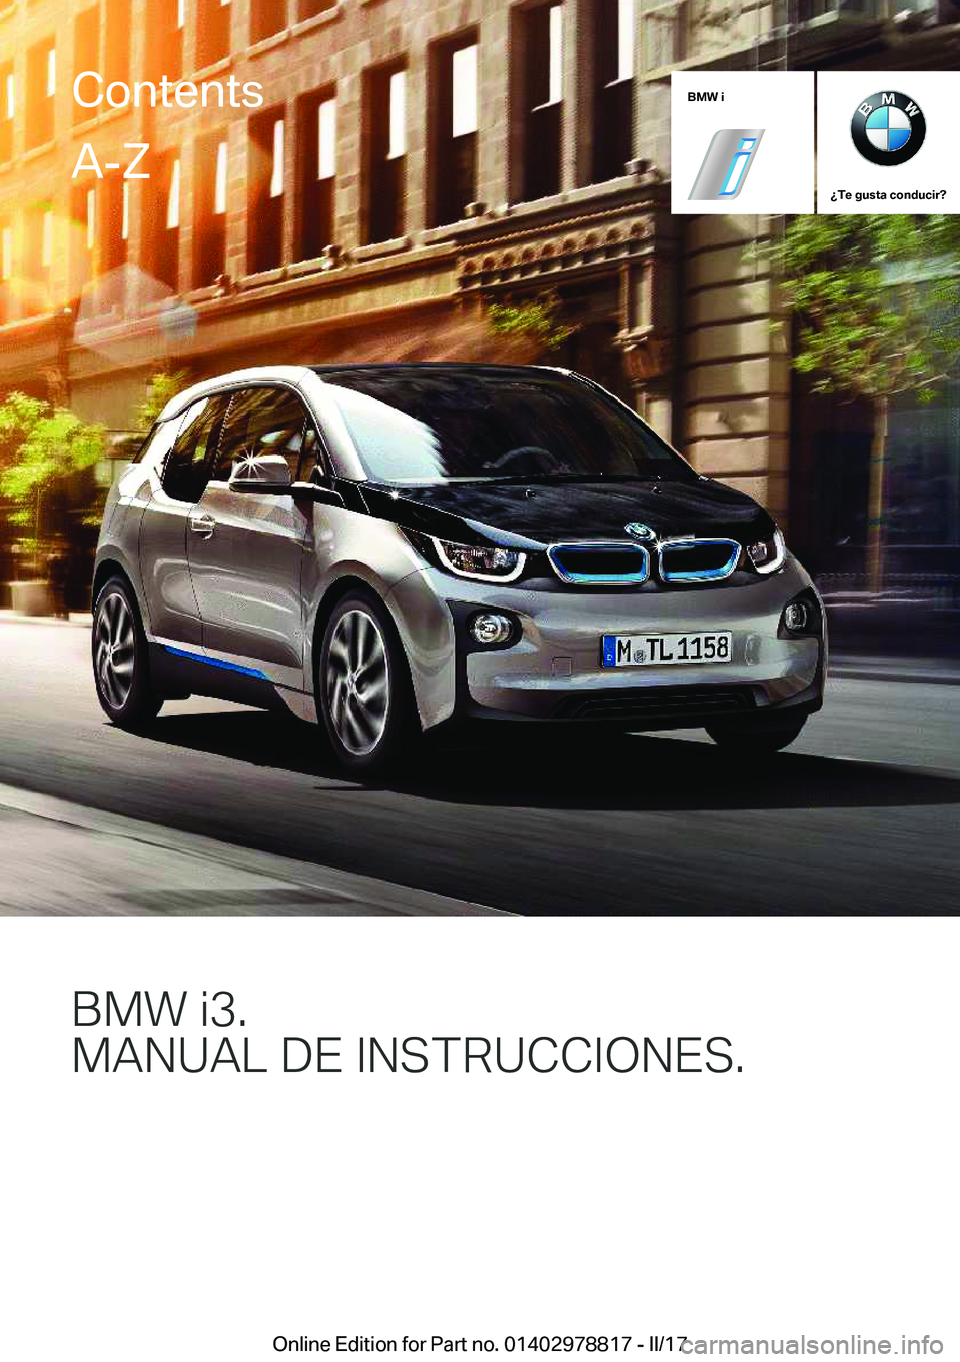 BMW I3 2017  Manuales de Empleo (in Spanish) �B�M�W��i
��T�e��g�u�s�t�a��c�o�n�d�u�c�i�r� 
�B�M�8��J��
�M�A�N�U�A�L��D�E��*�N�S�T�R�U�C�C�*�O�N�E�S�
�C�o�n�t�e�n�t�s�A�-�Z
�O�n�l�i�n�e� �E�d�i�t�i�o�n� �f�o�r� �P�a�r�t� �n�o�.� �0�1�4�